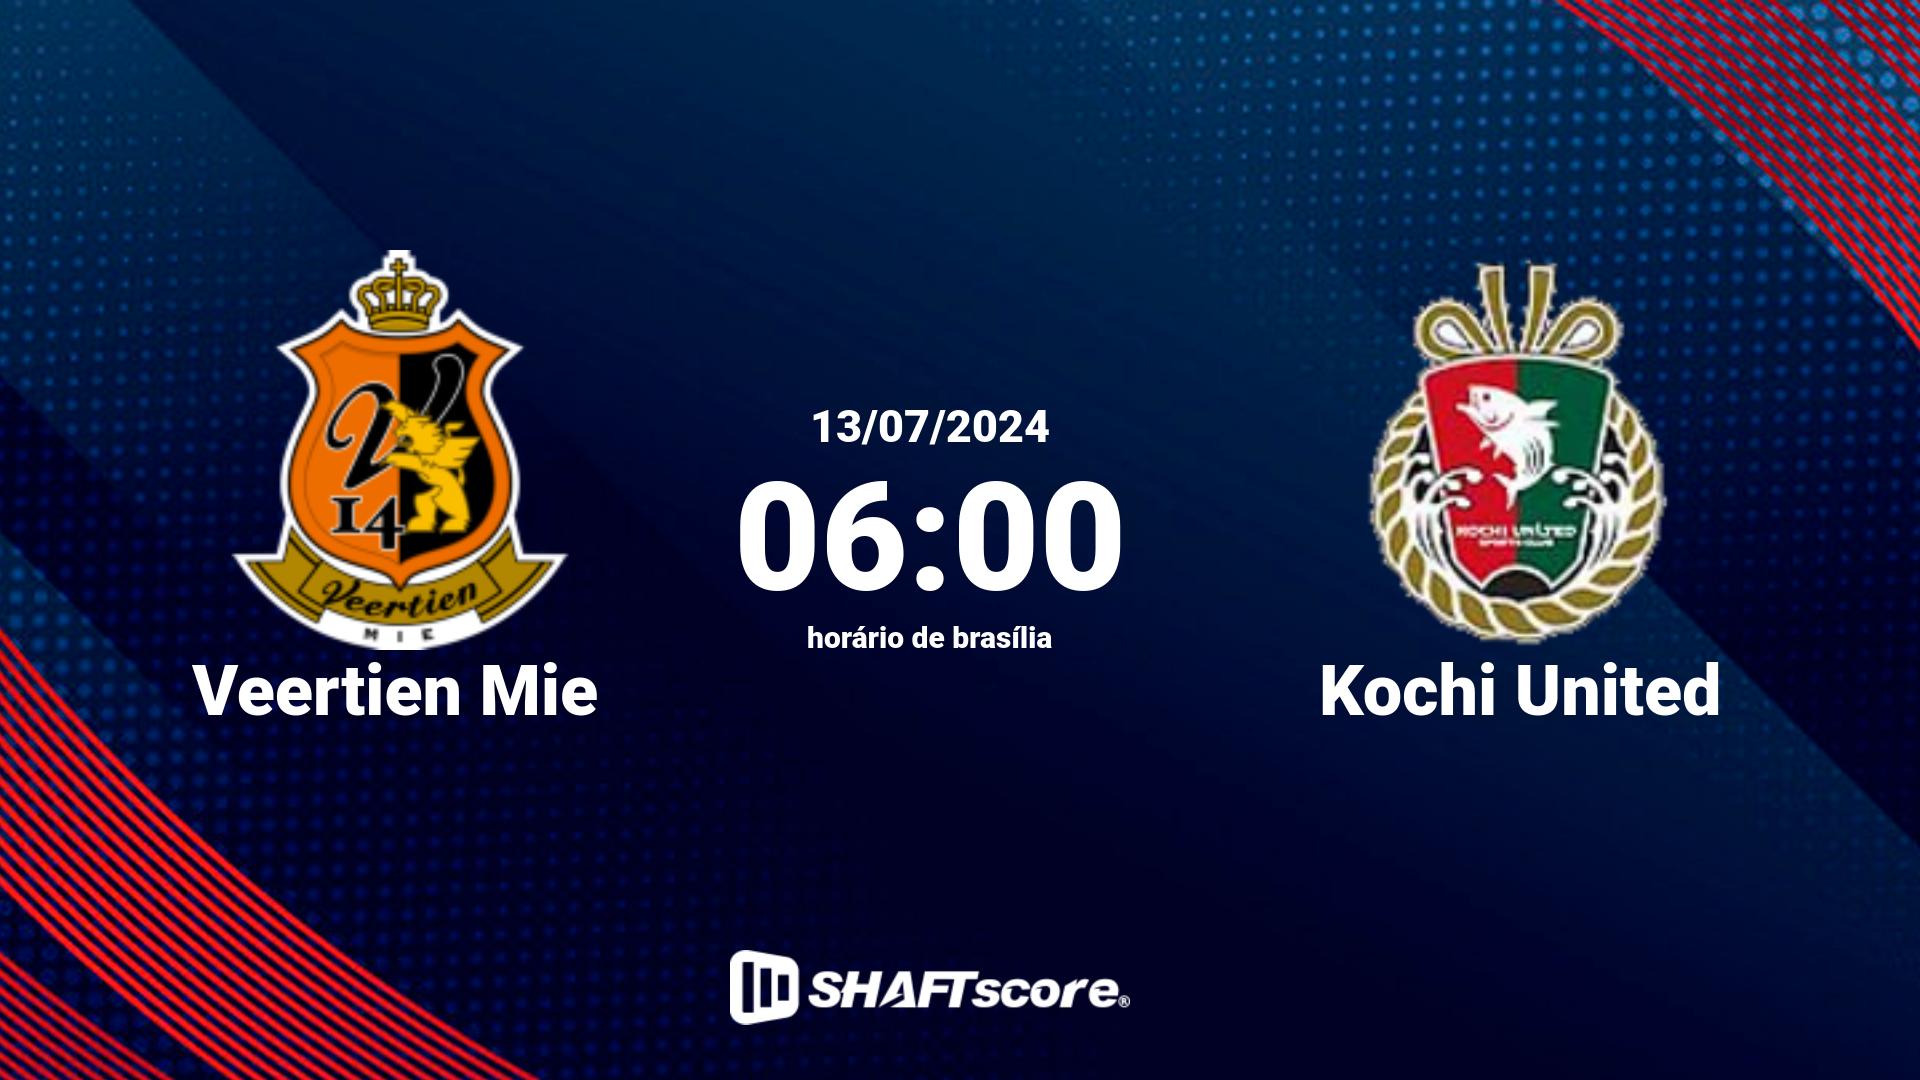 Estatísticas do jogo Veertien Mie vs Kochi United 13.07 06:00